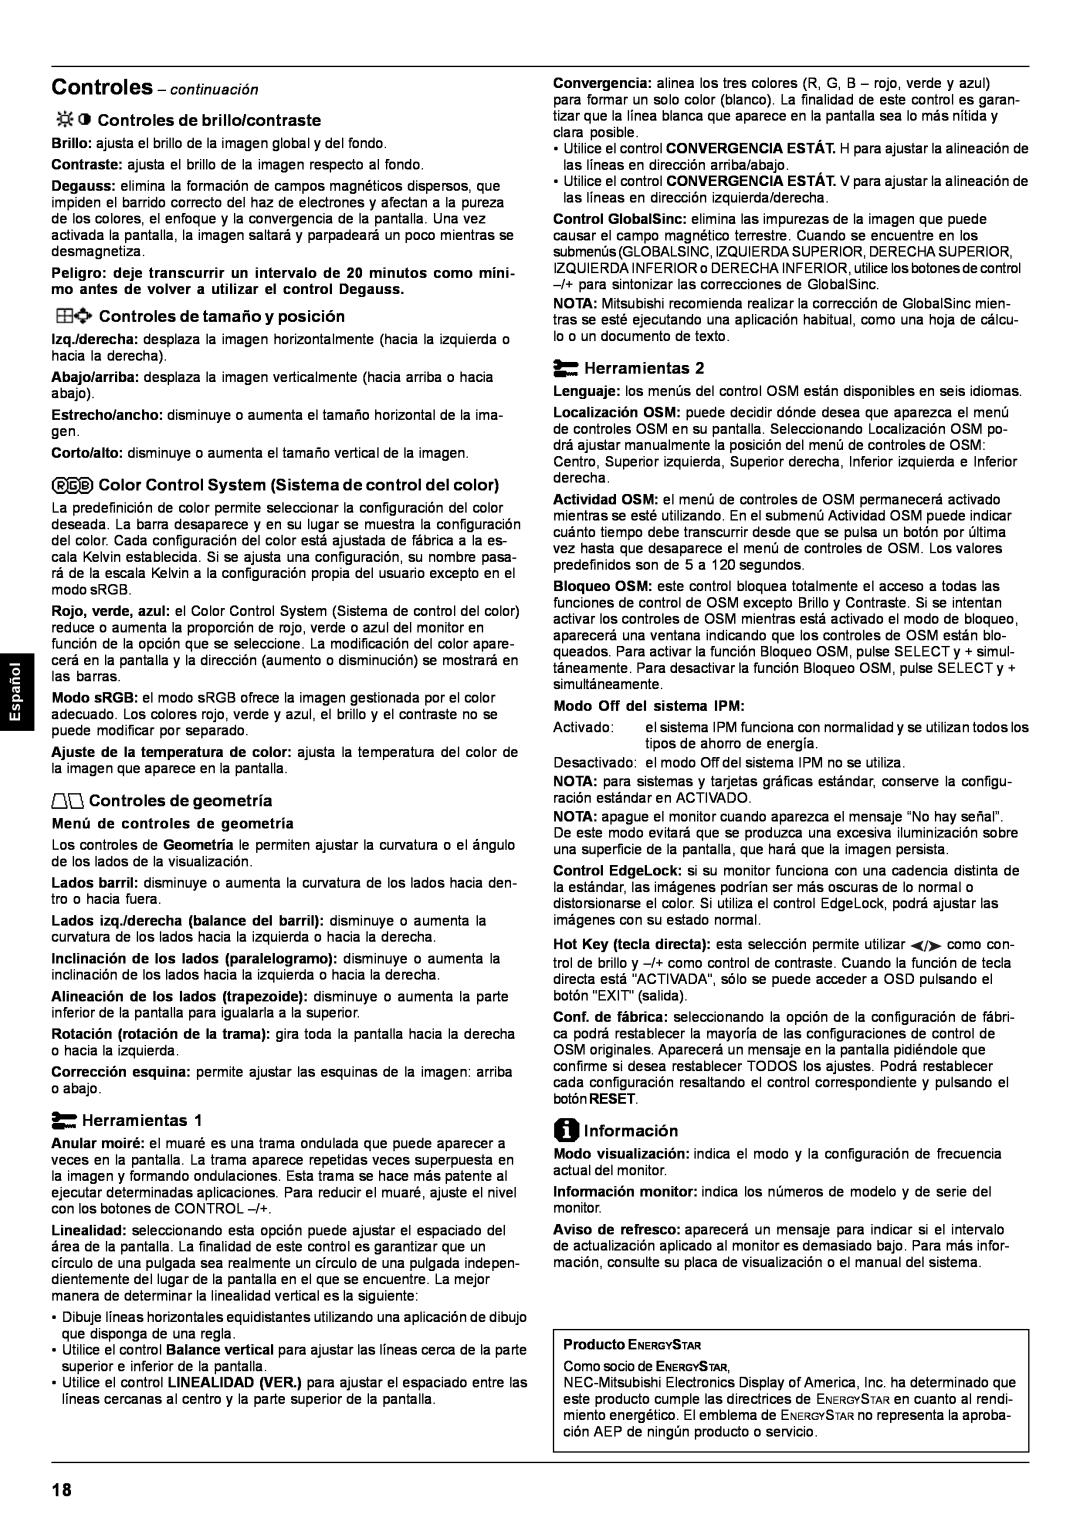 Mitsubishi Electronics Pro 930SB user manual Español, Controles - continuación, Menú de controles de geometría 